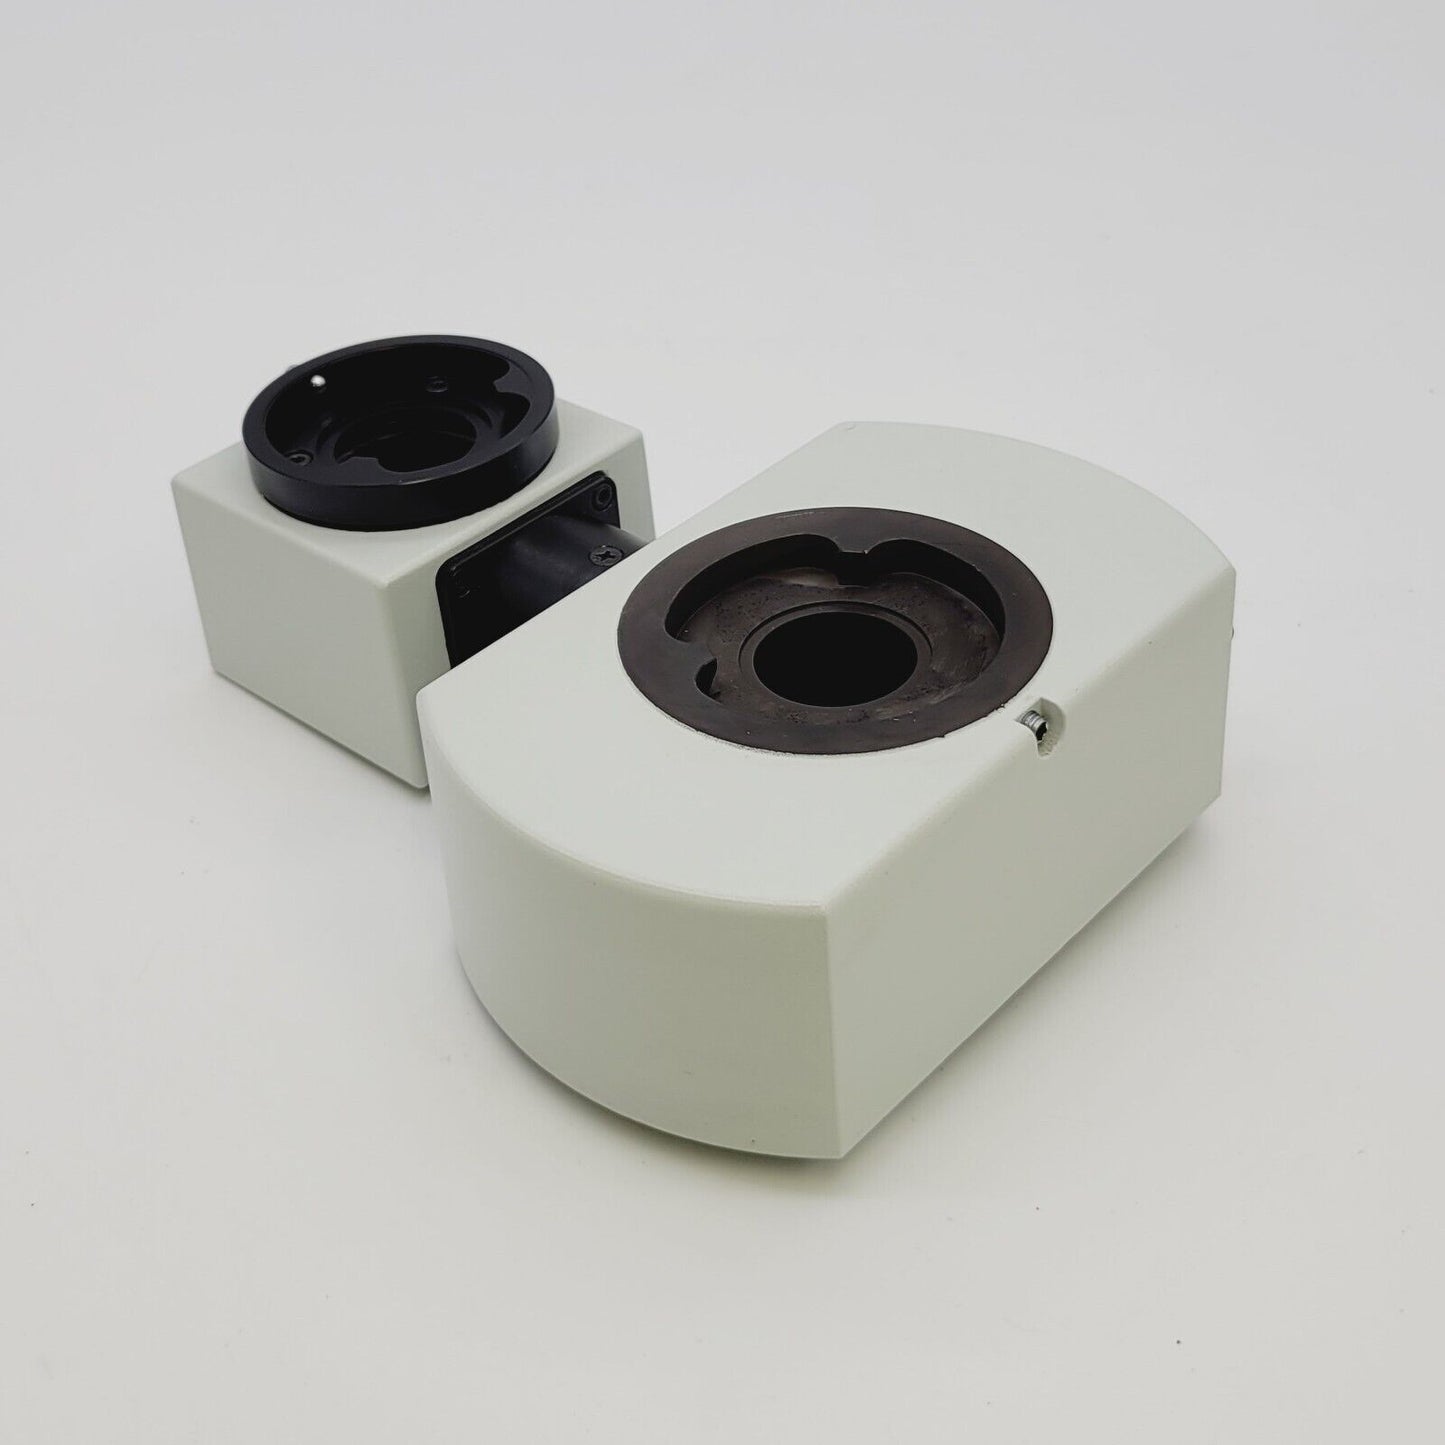 Olympus Microscope U-TRU Side Camera Port Intermediate Tube - microscopemarketplace